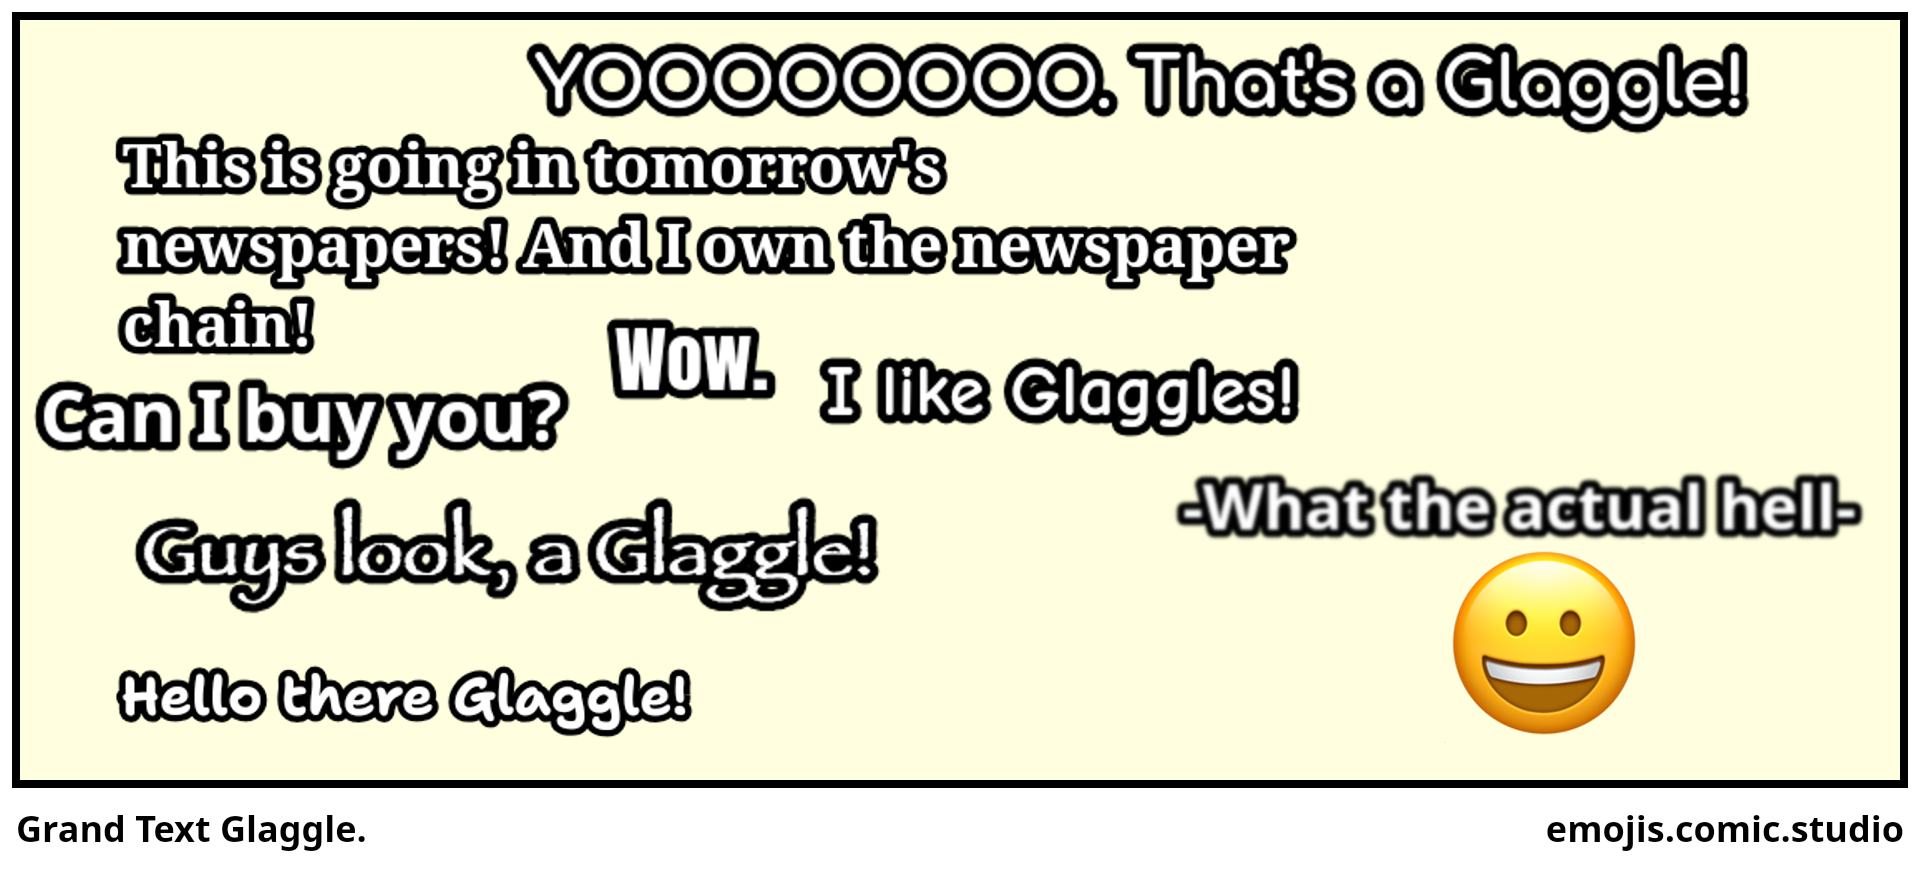 Grand Text Glaggle.